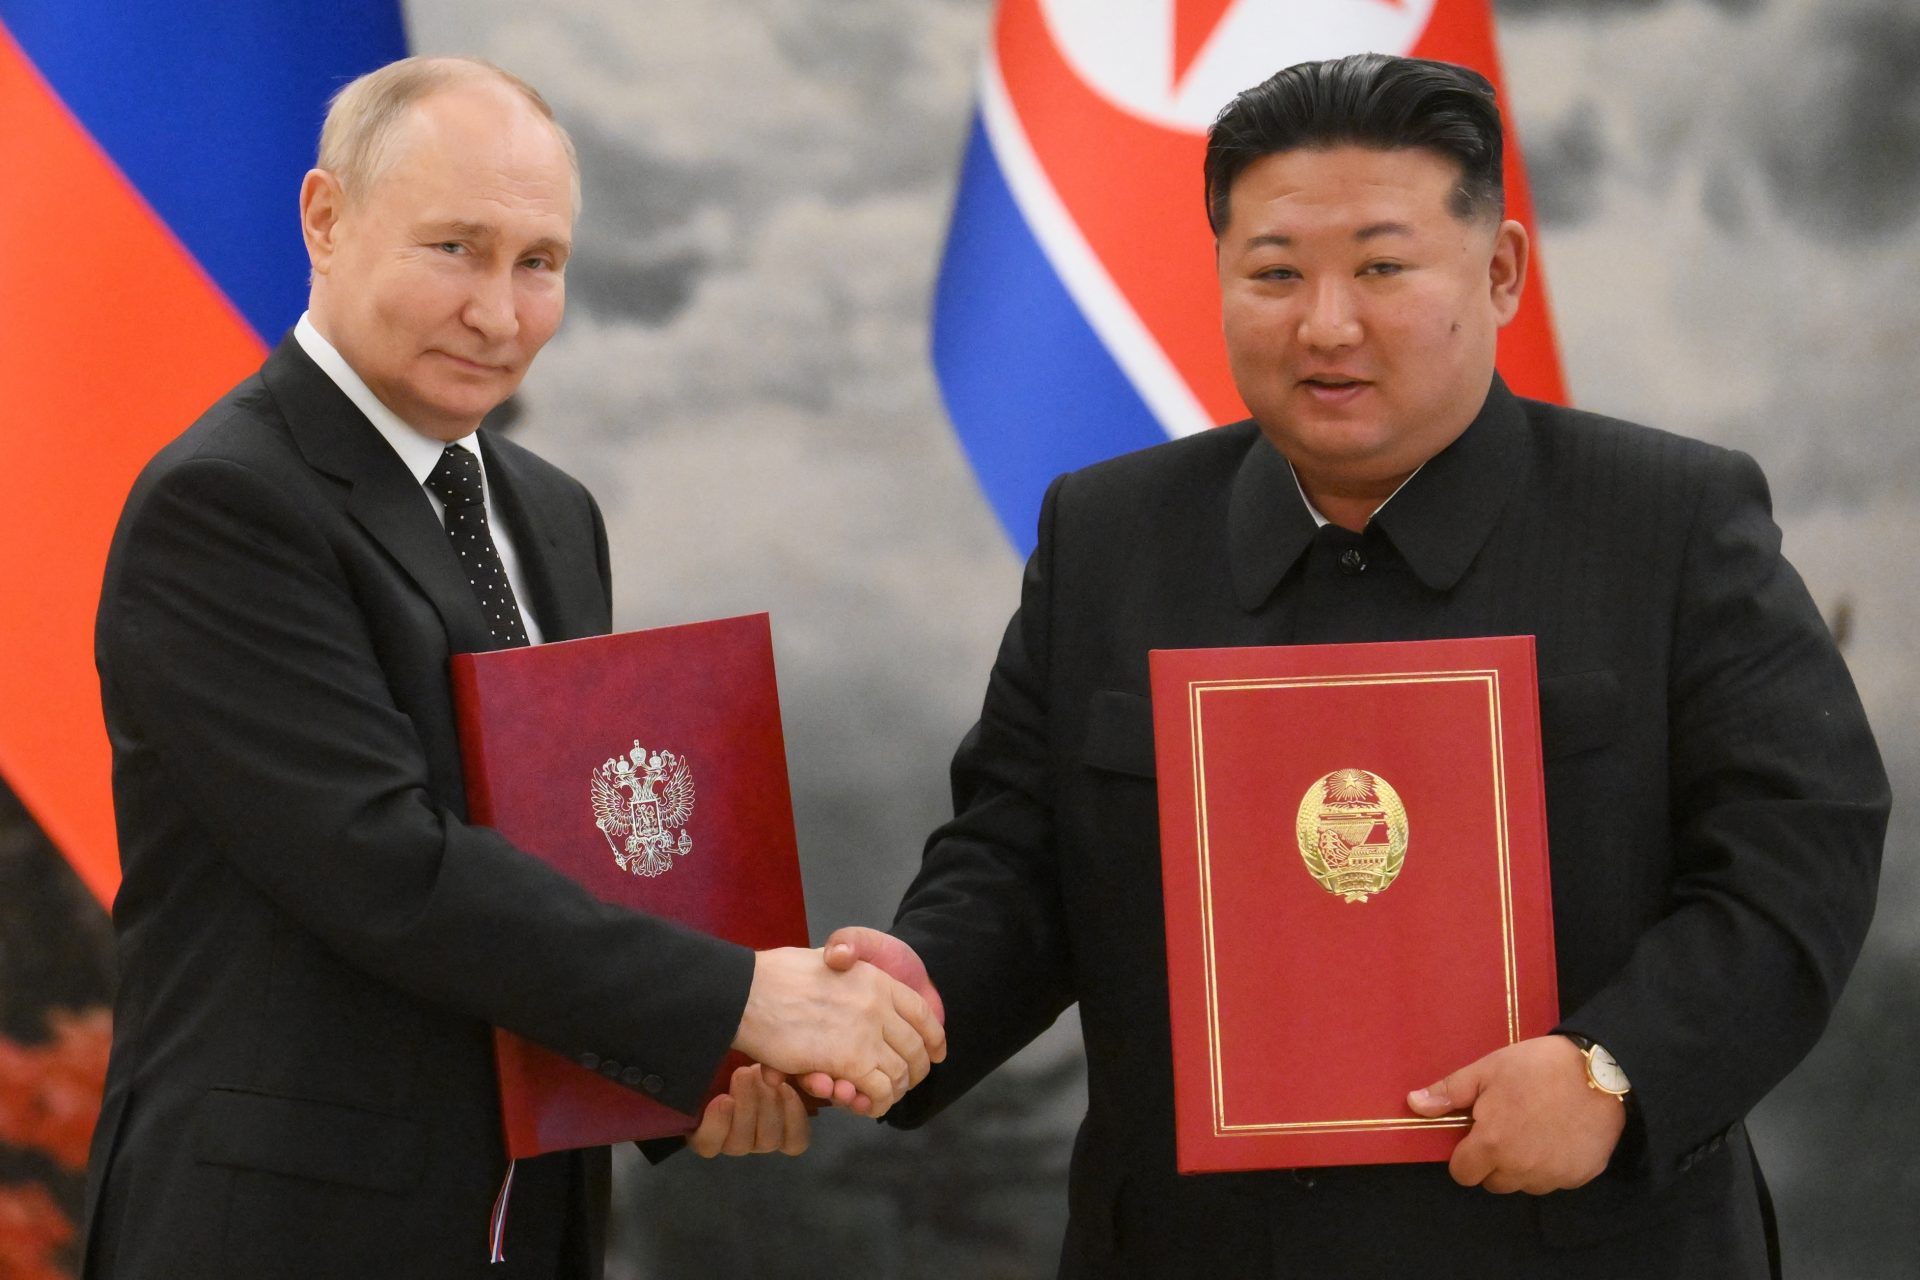 Putin’s June visit to Kim 